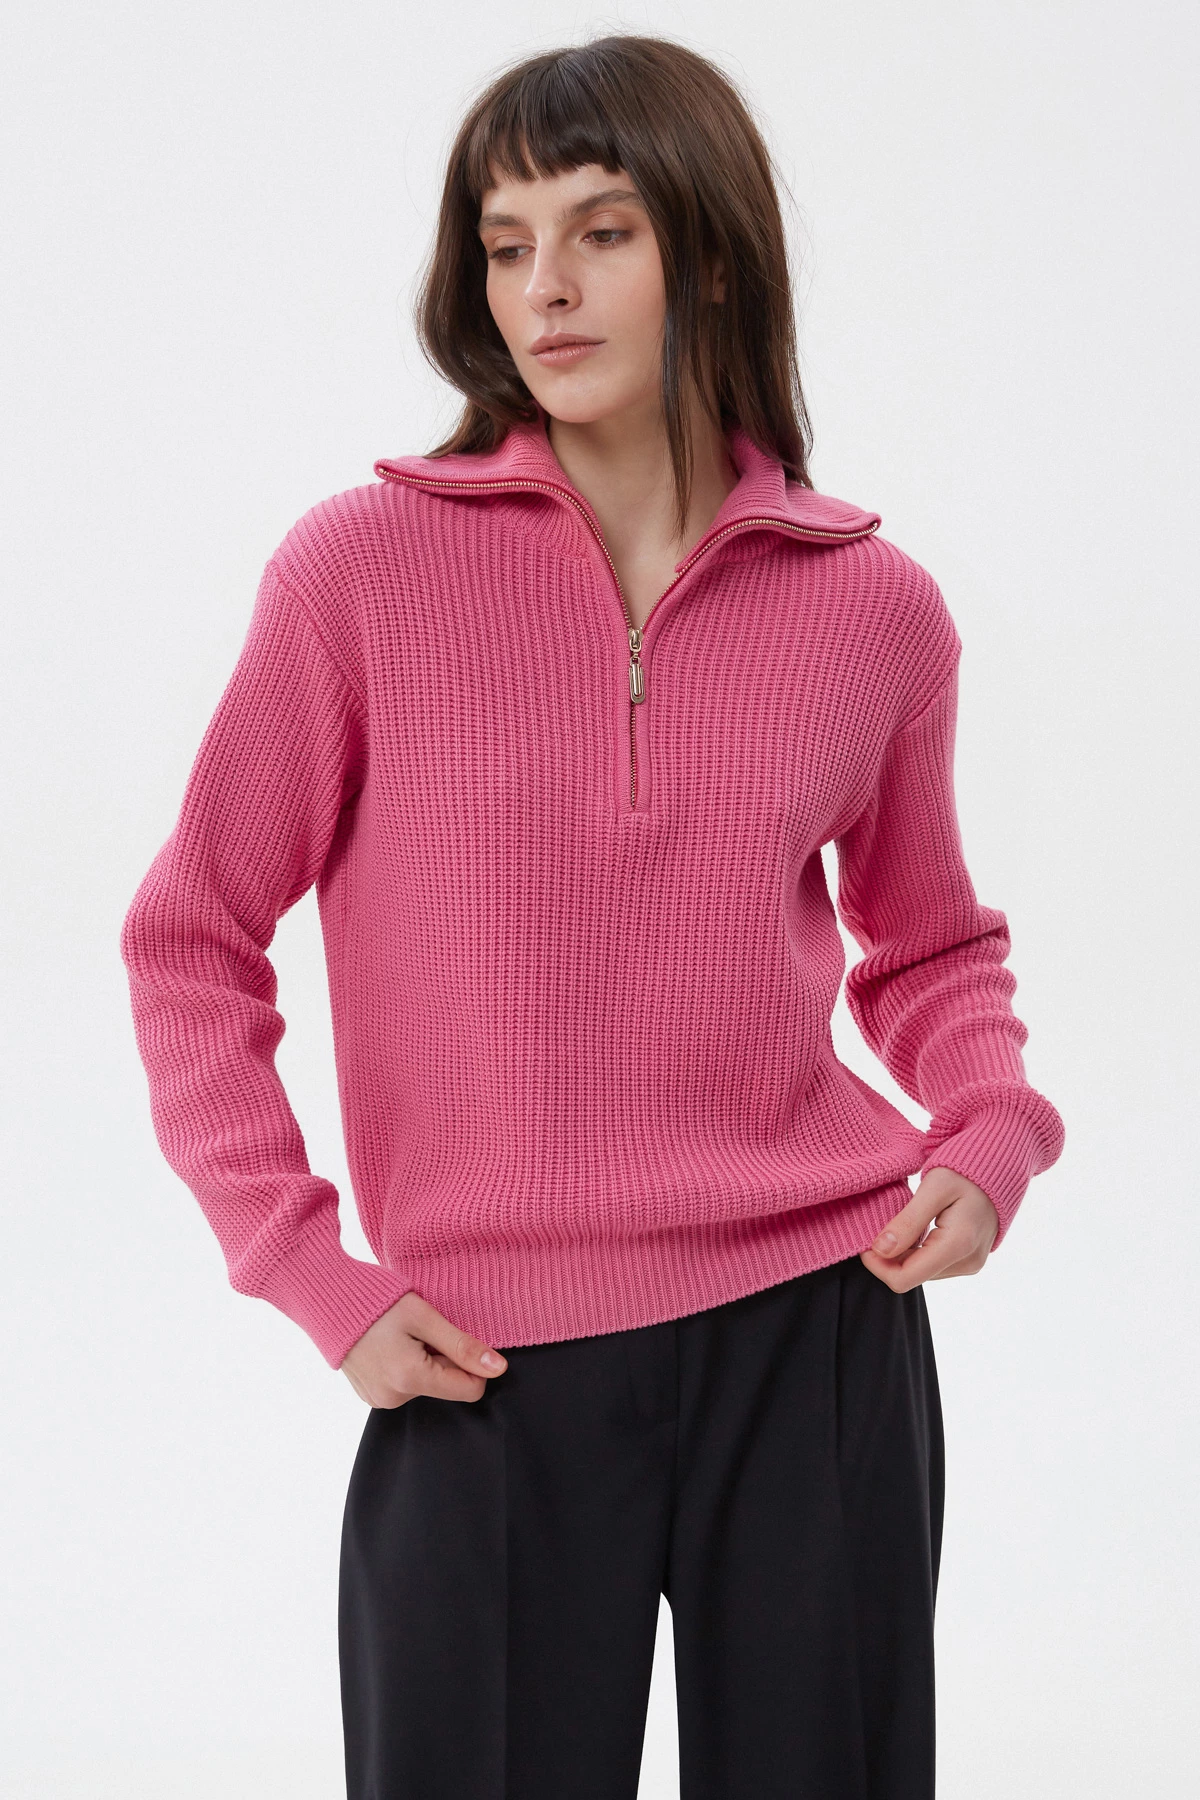 Pink cotton zip-up knit sweater, photo 2